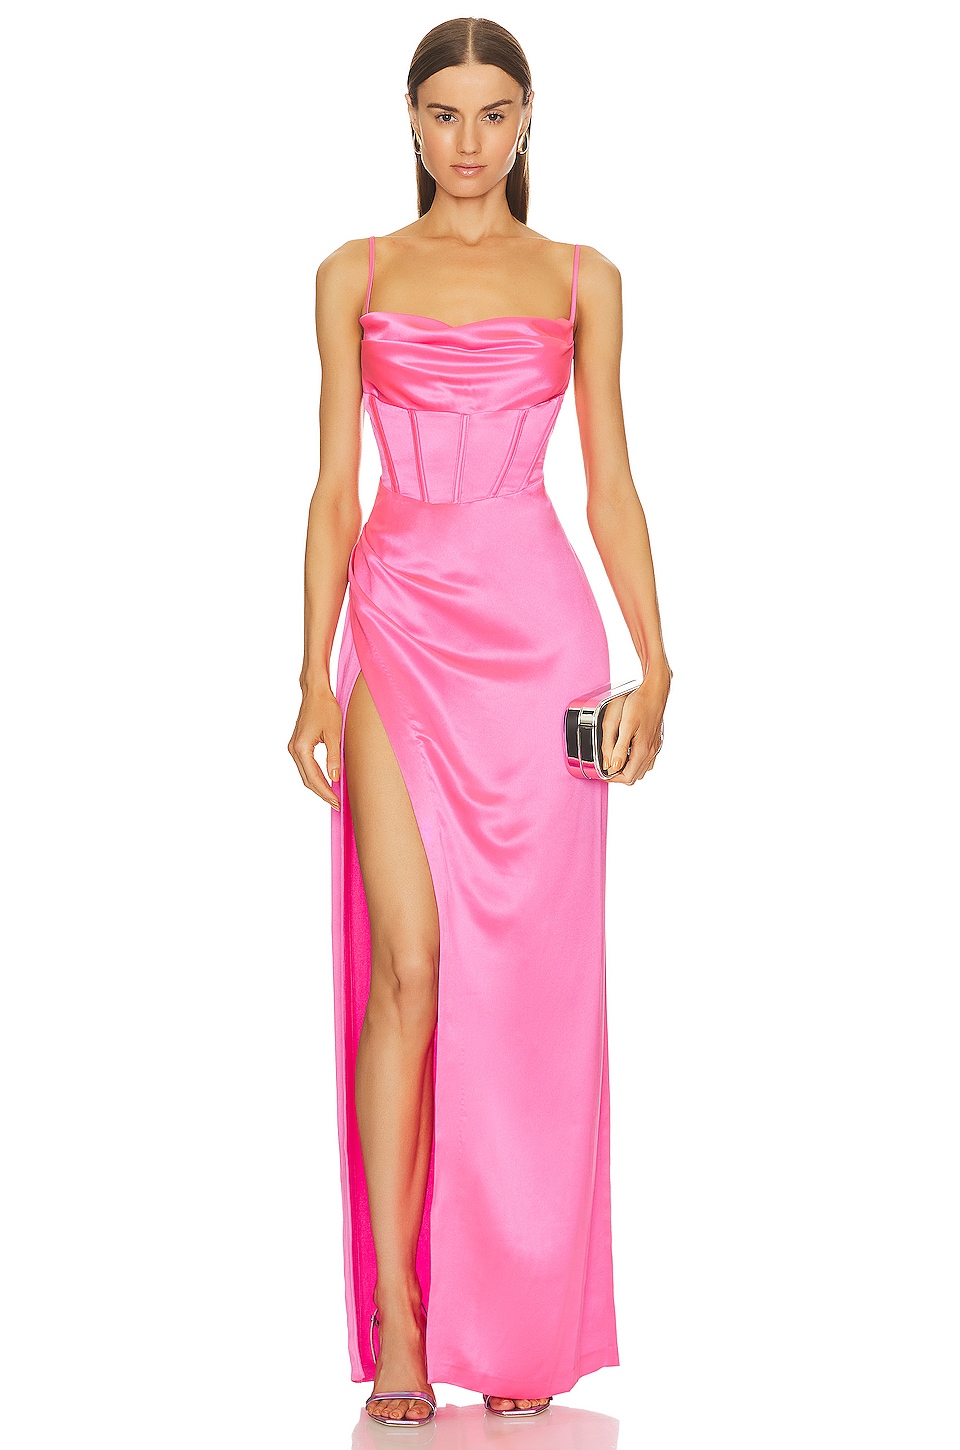 Платье retrofete Rosa, цвет Hyper Pink платье retrofete tara crochet цвет iridescent pink